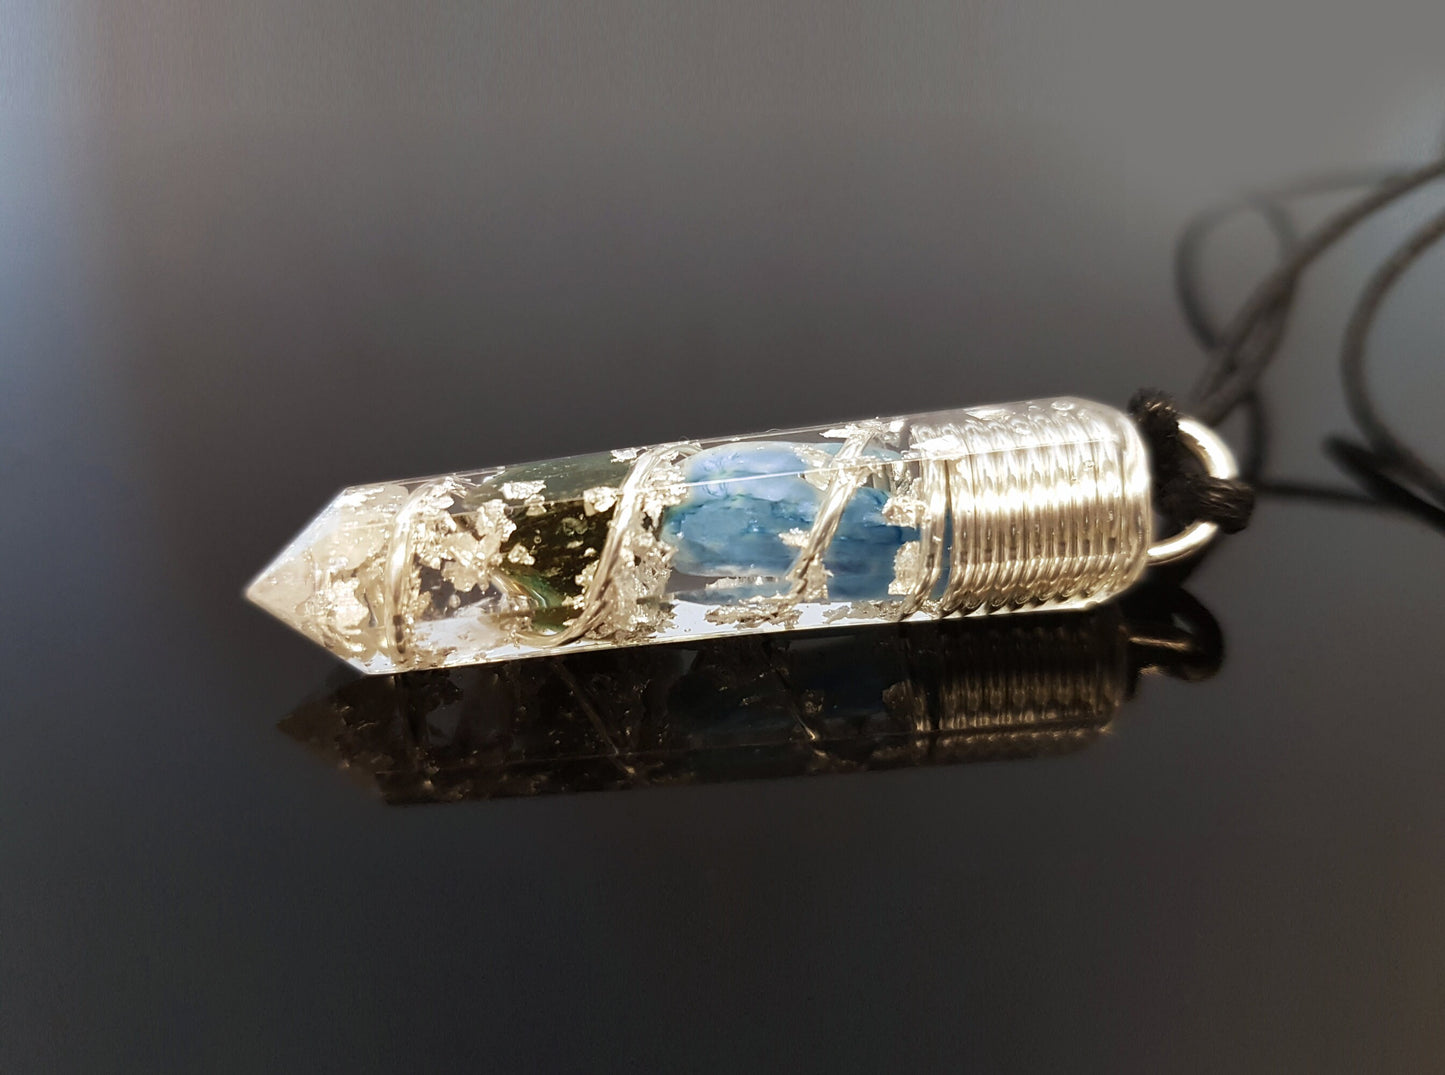 Orgonite orgone Pendant - most powerful magic amulet Necklace - Moldavite, Herkimer, Diamonds, Kyanite, silver